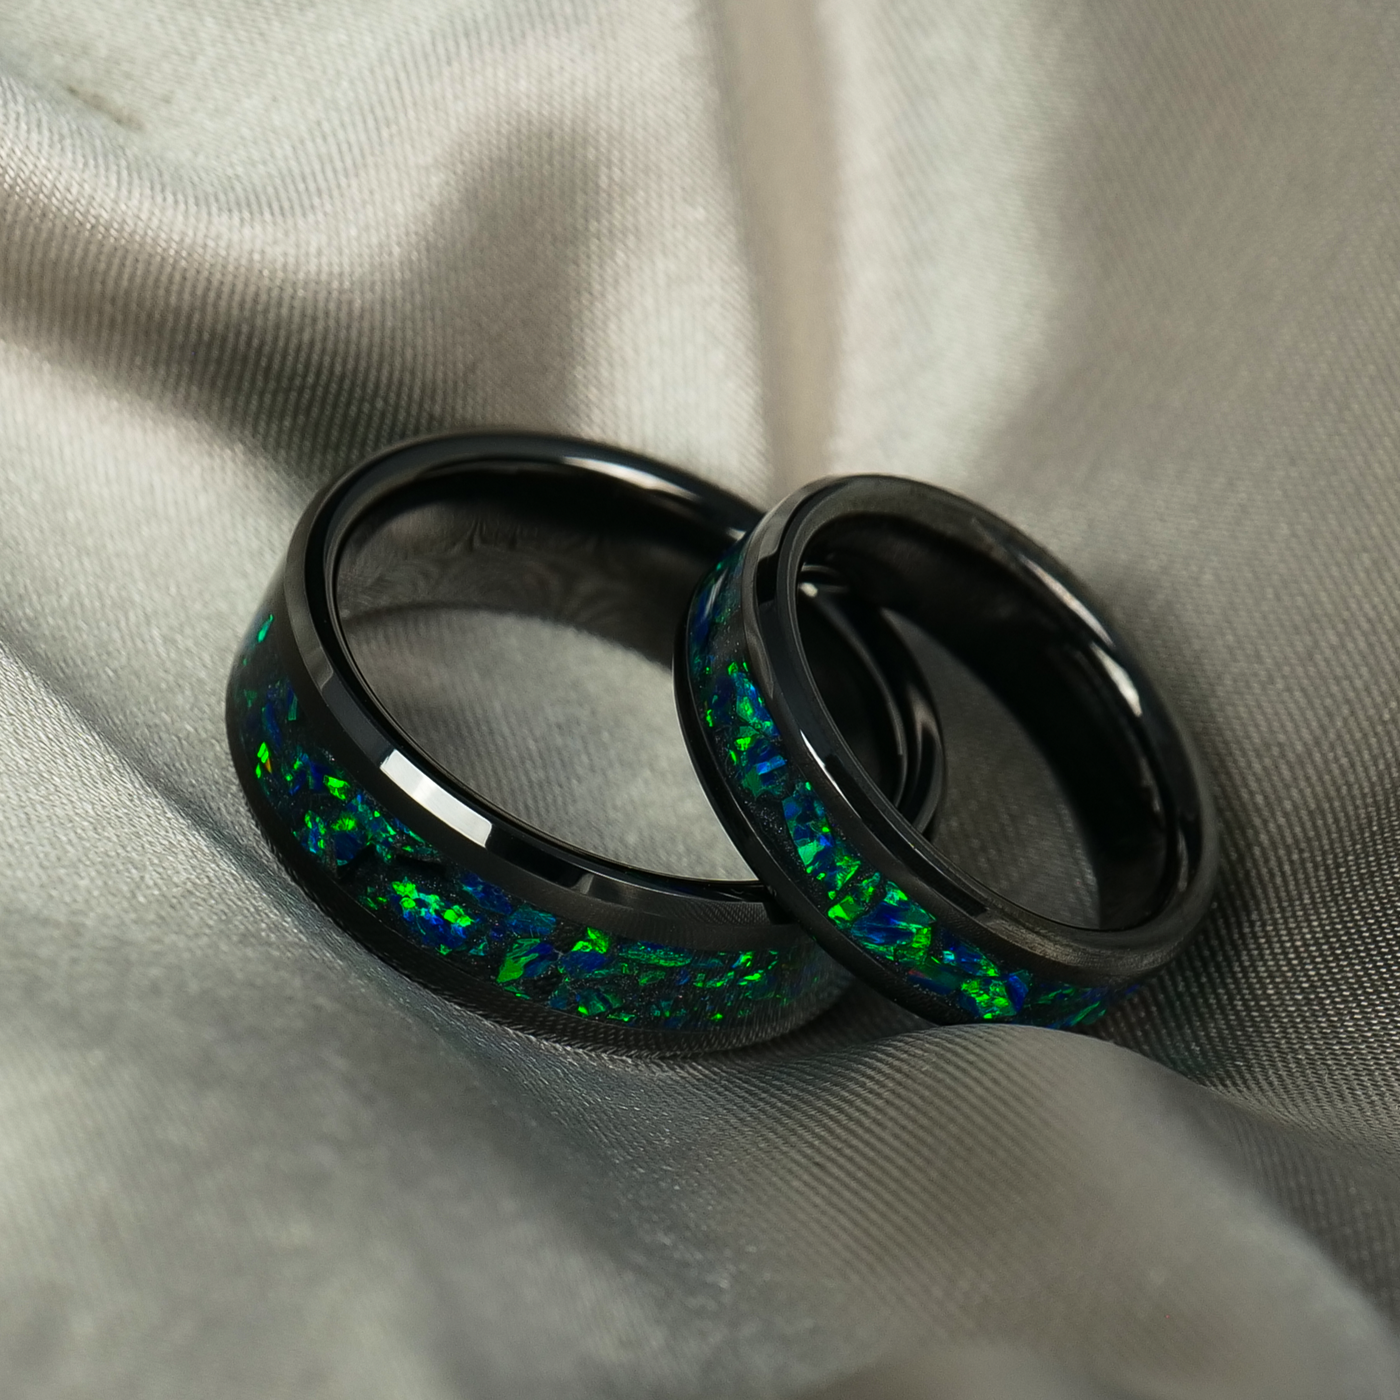 Matching Black Emerald Opal Glowstone Wedding Ring Set - Patrick Adair Designs